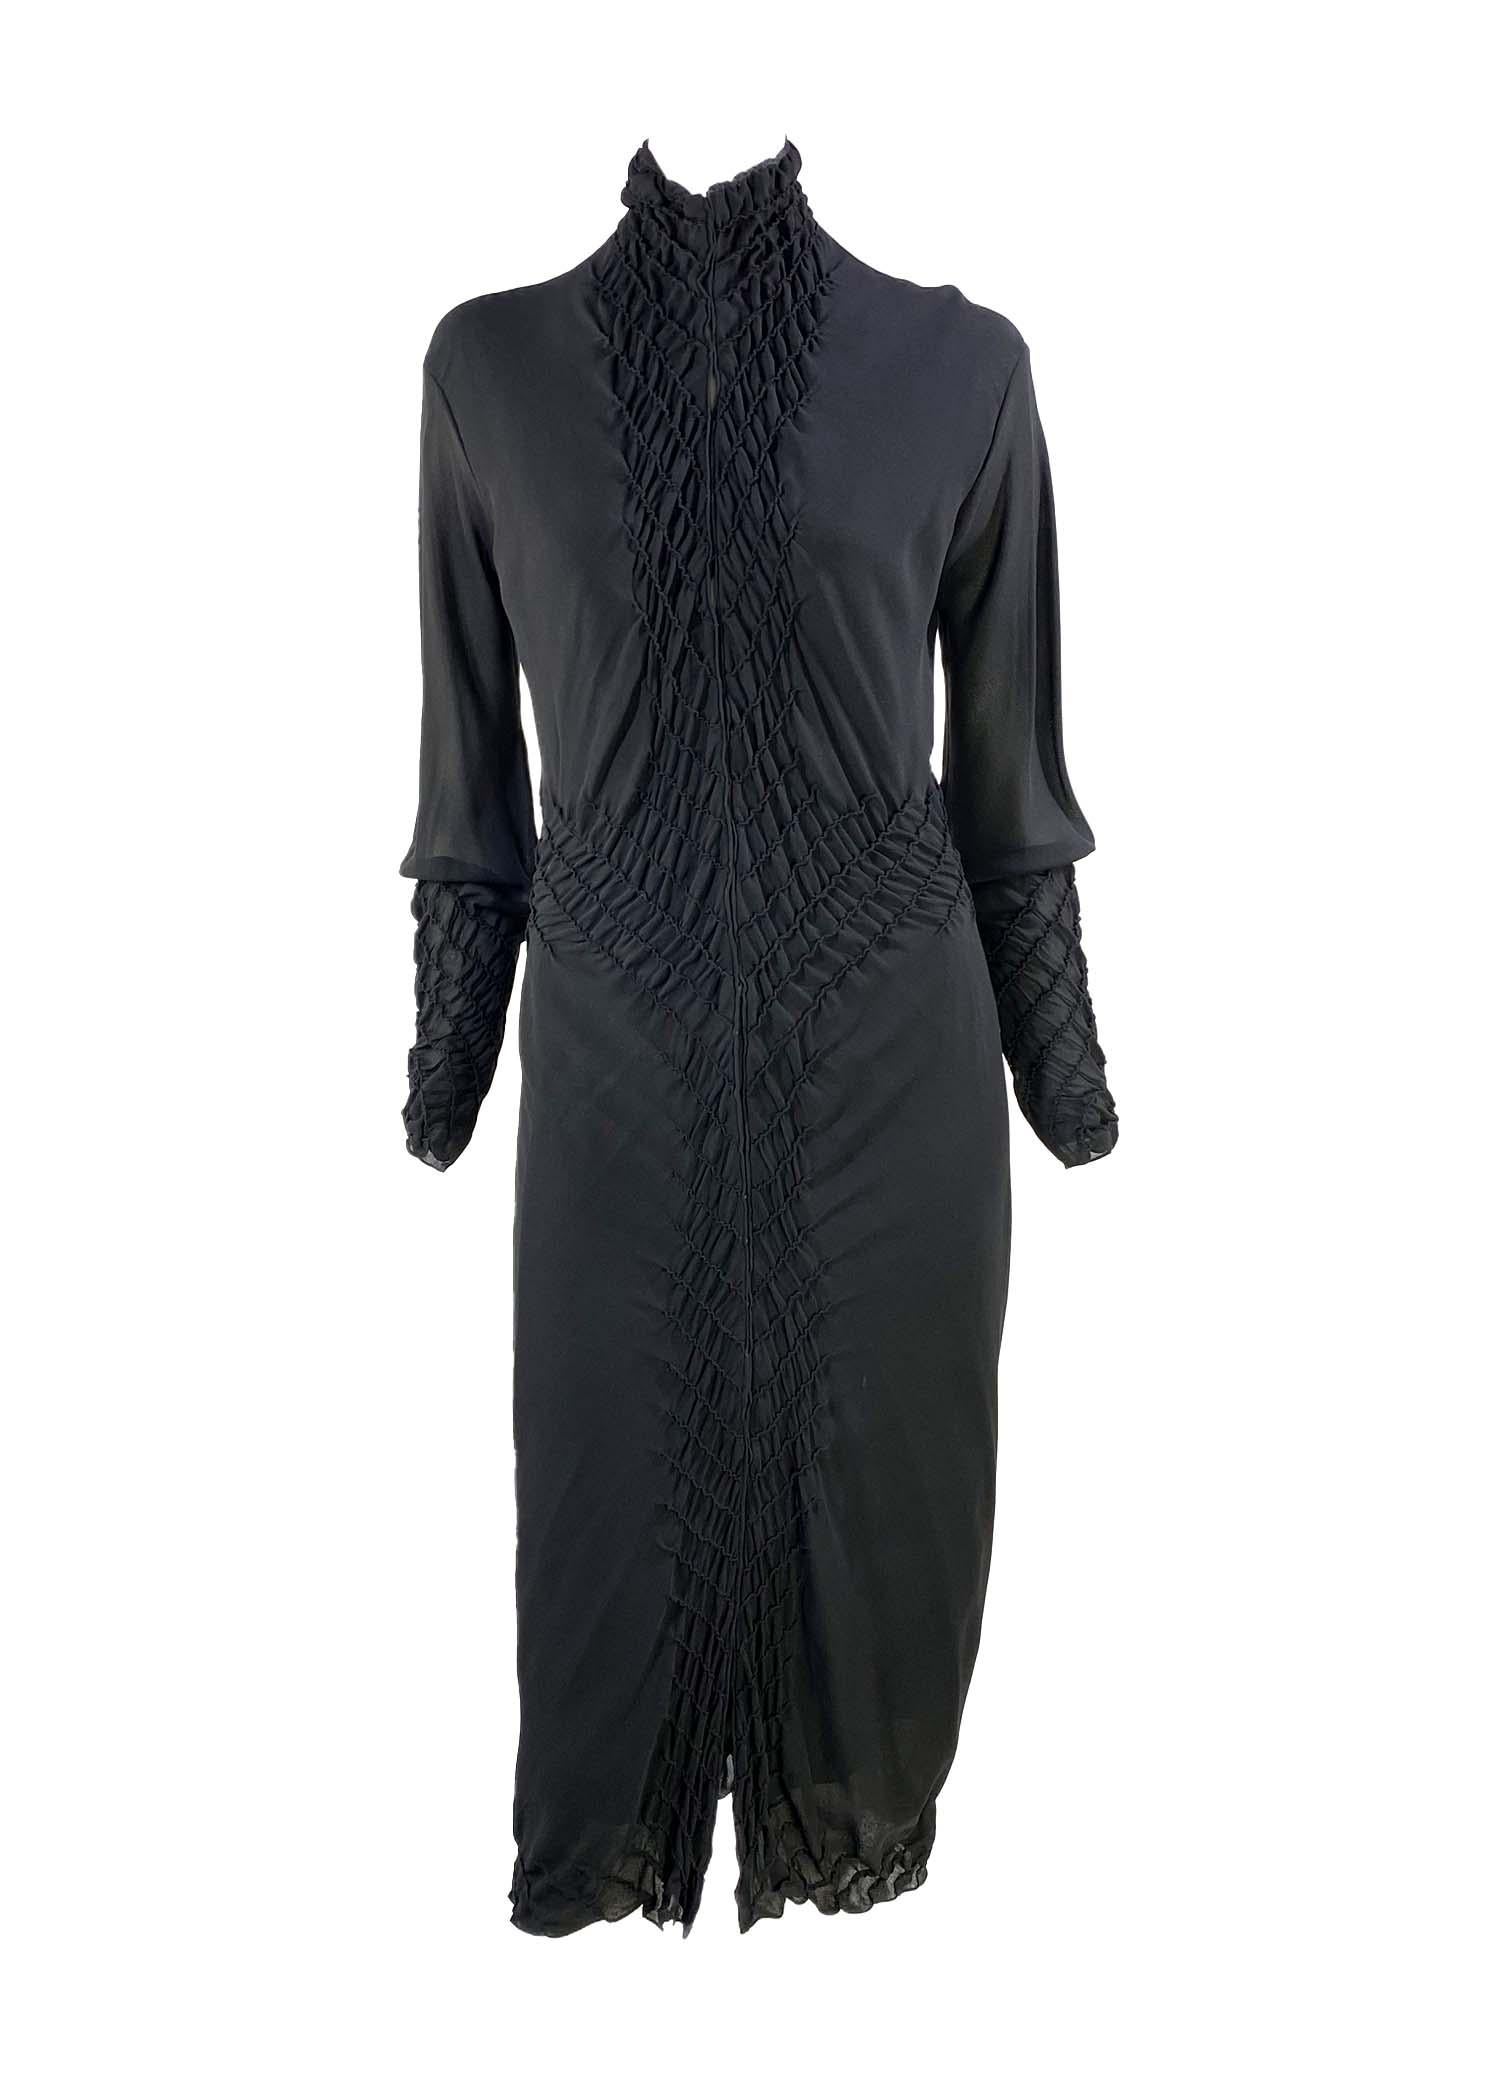 F/W 2001 Yves Saint Laurent by Tom Ford Black Silk Long Sleeve Runway Dress For Sale 2